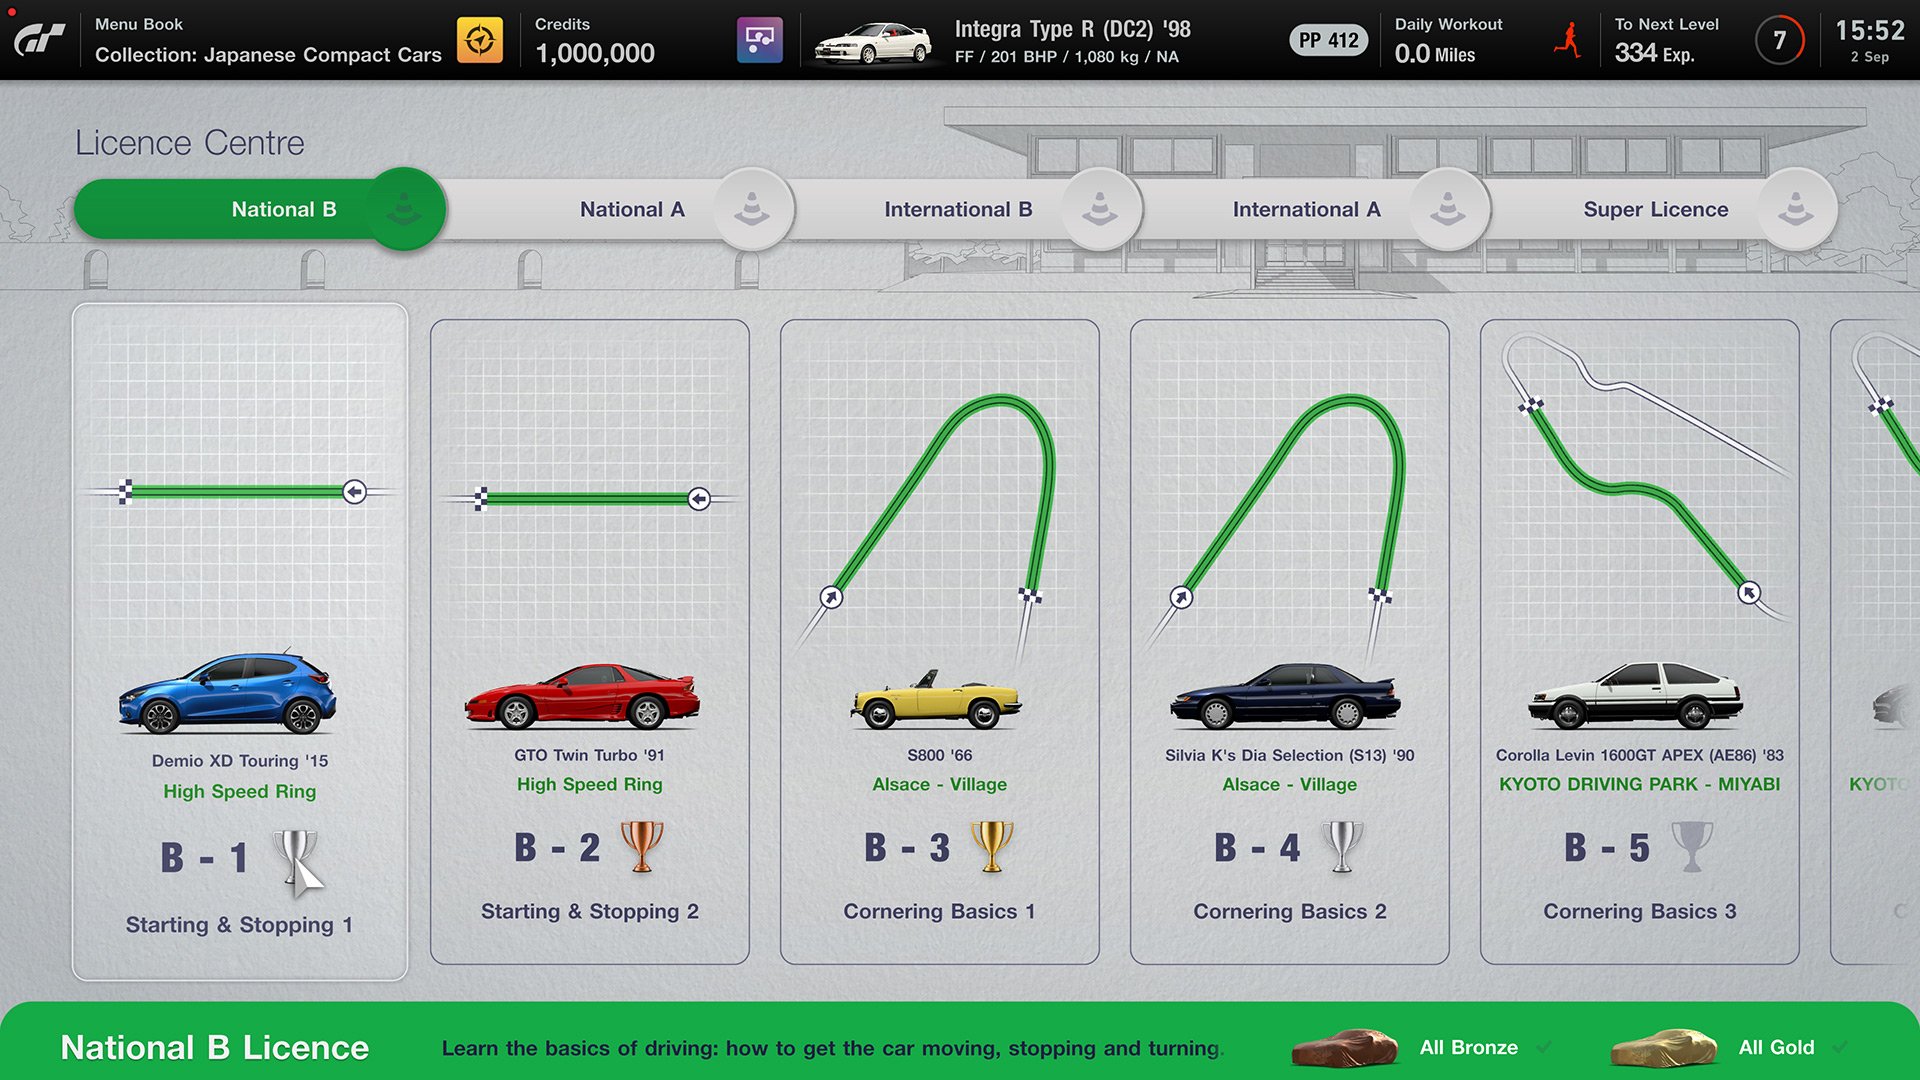 Gran Turismo 7 recebeu 3 novos carros